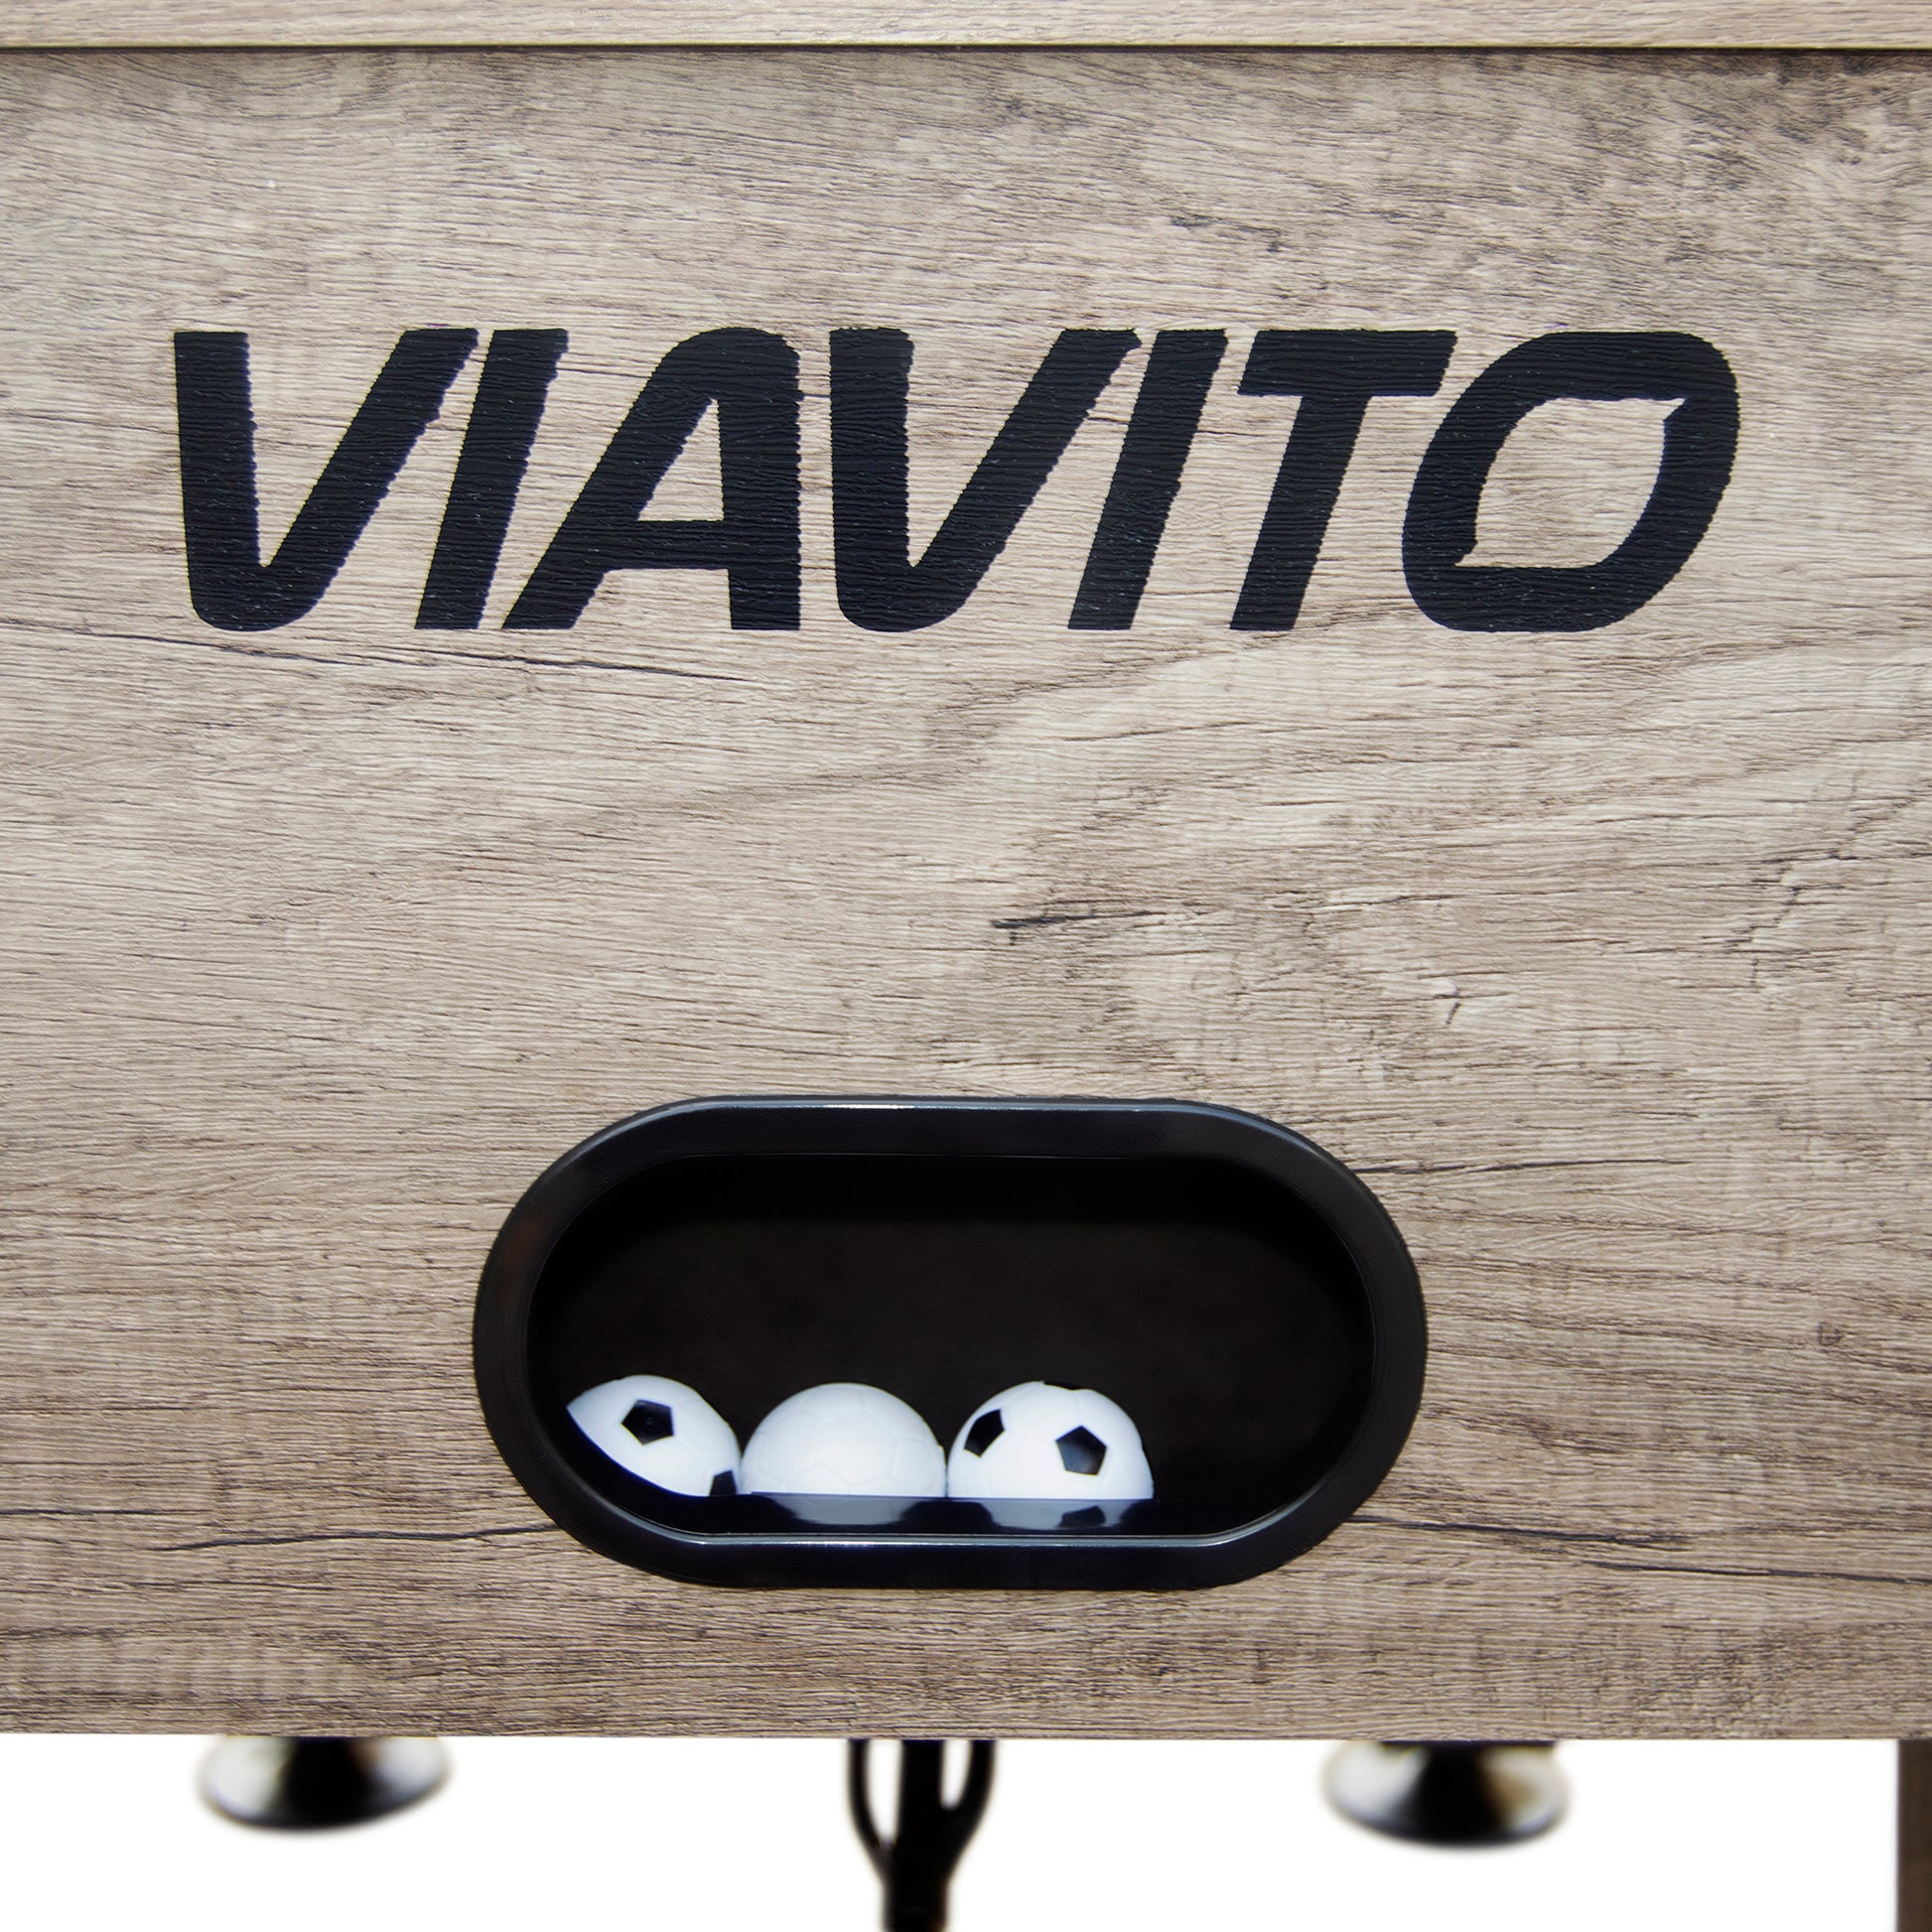 |Viavito FT500 Football Table - Logo|